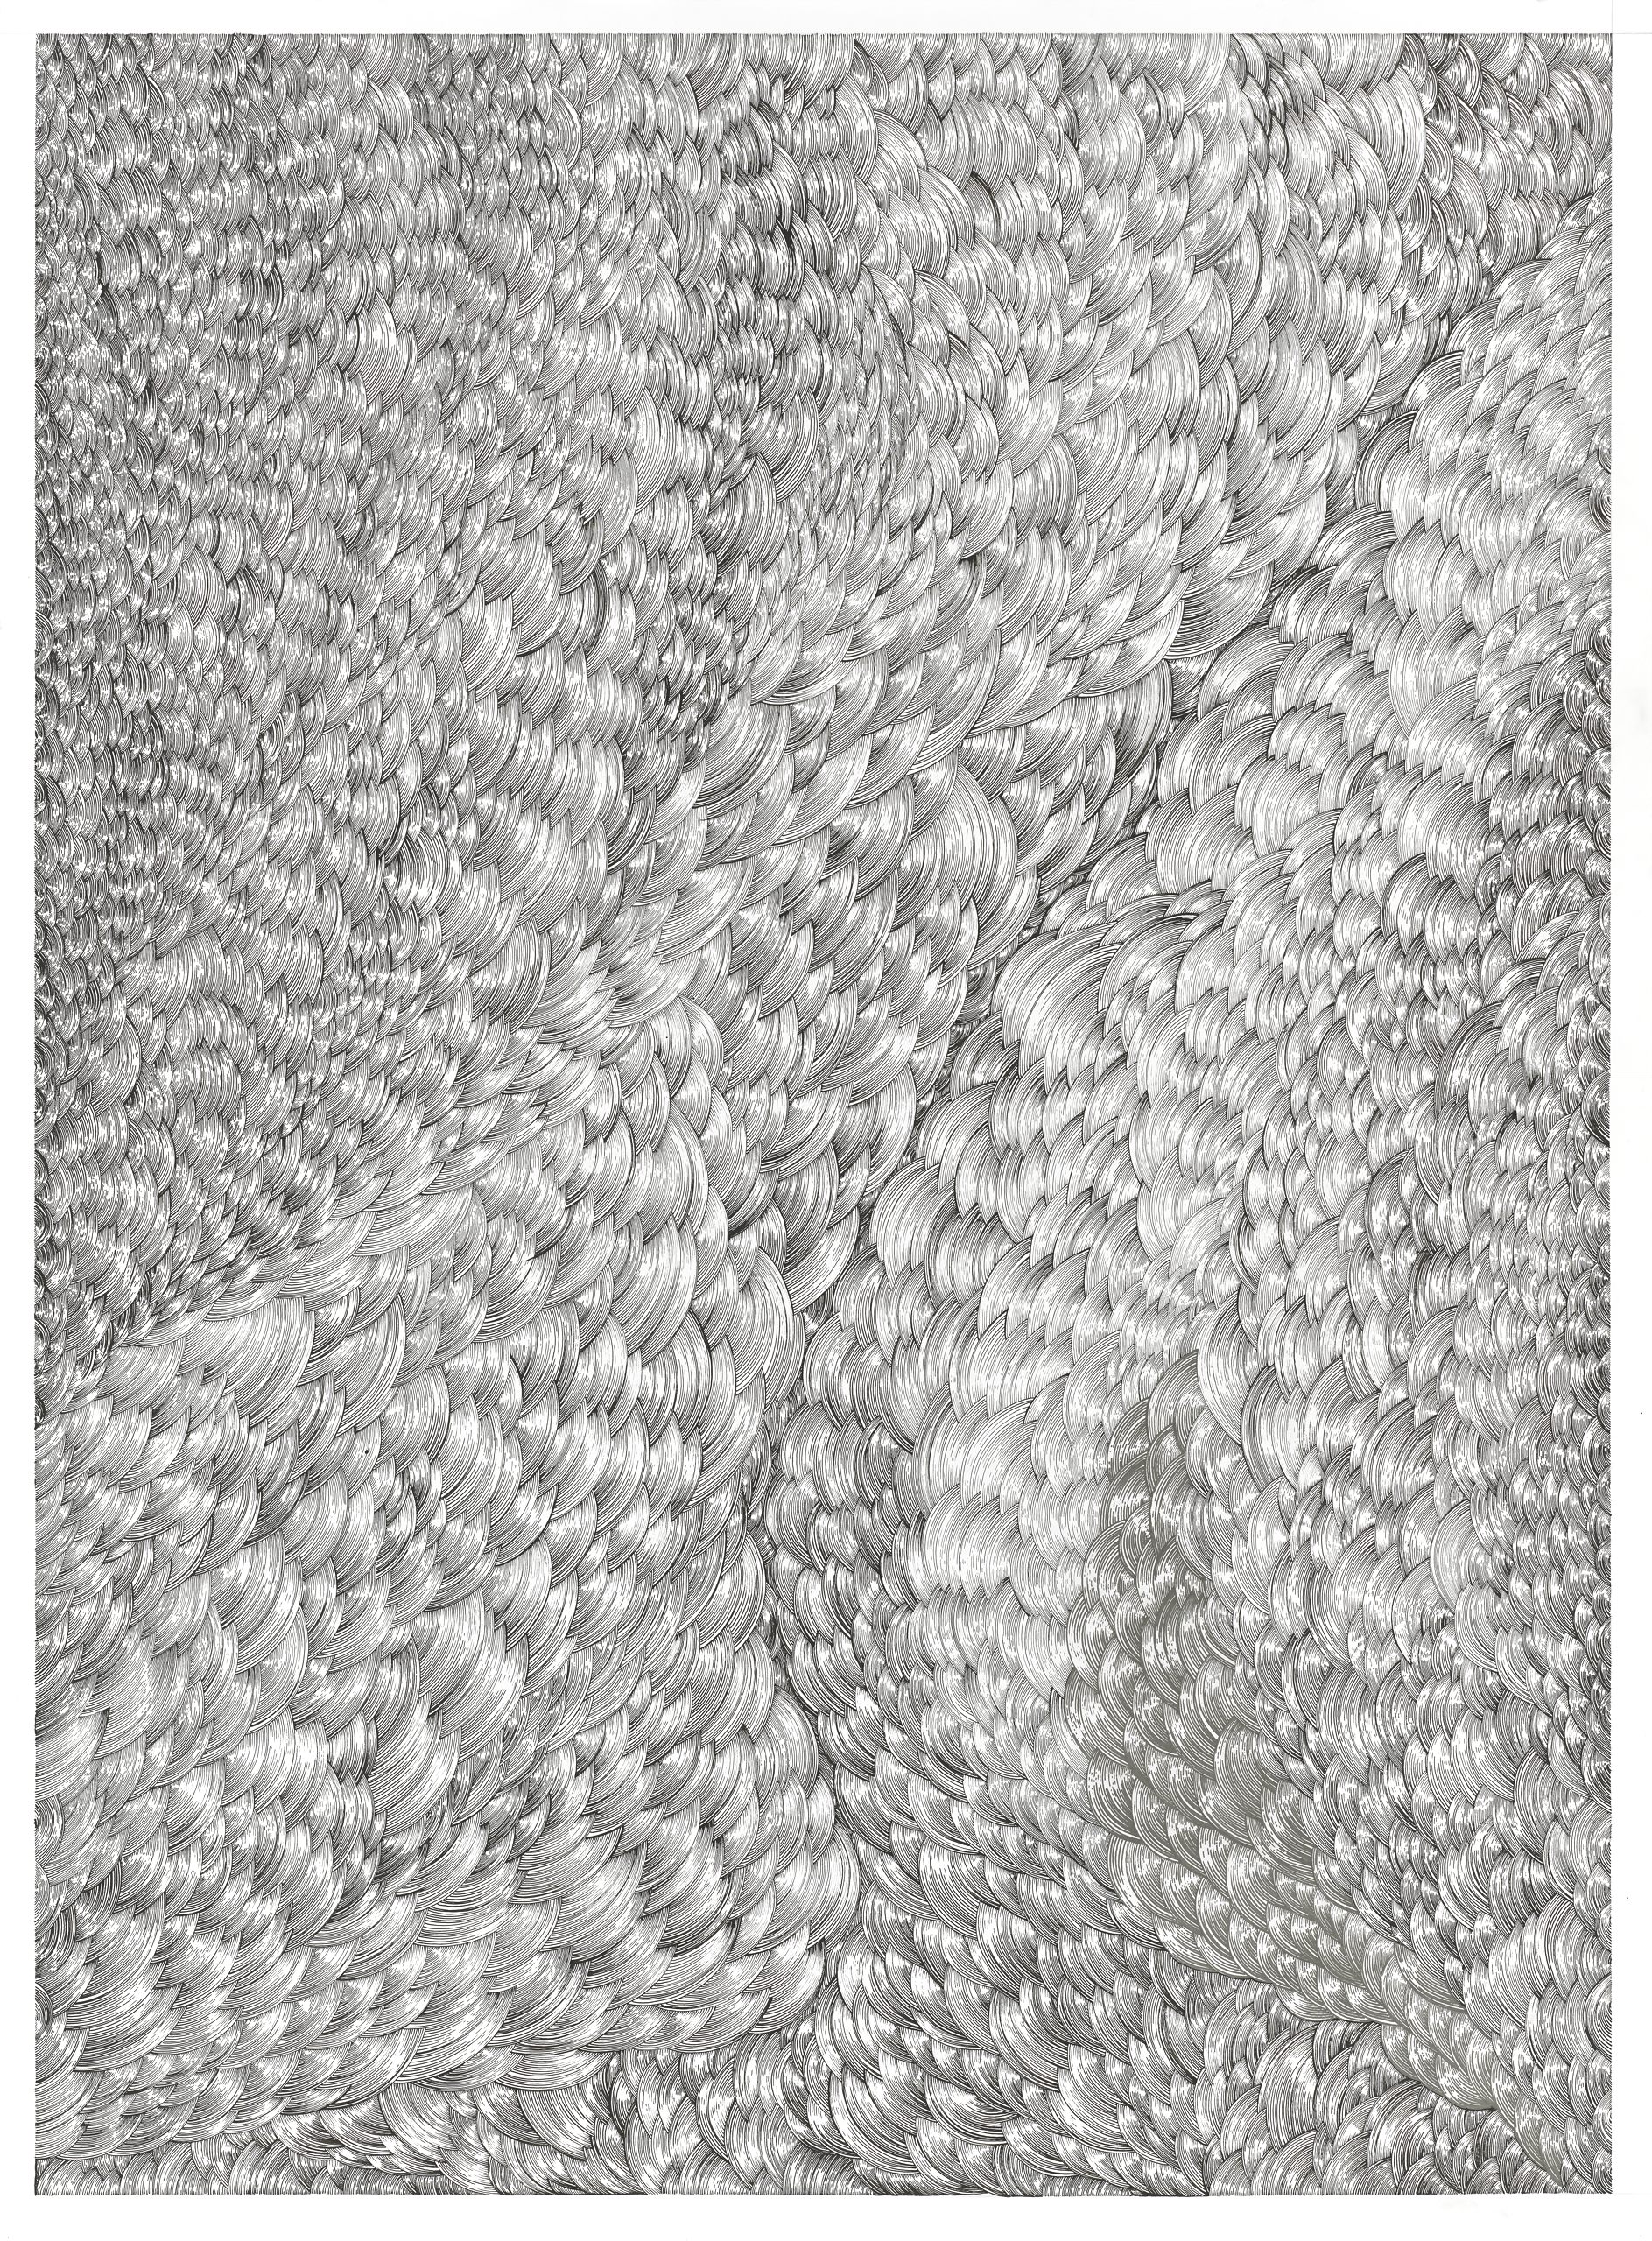 BK P158 | diptychon part B | untitled | acrylic on paper | 200x170cm_2014 | collection kunstwerk alison u. peter w. klein